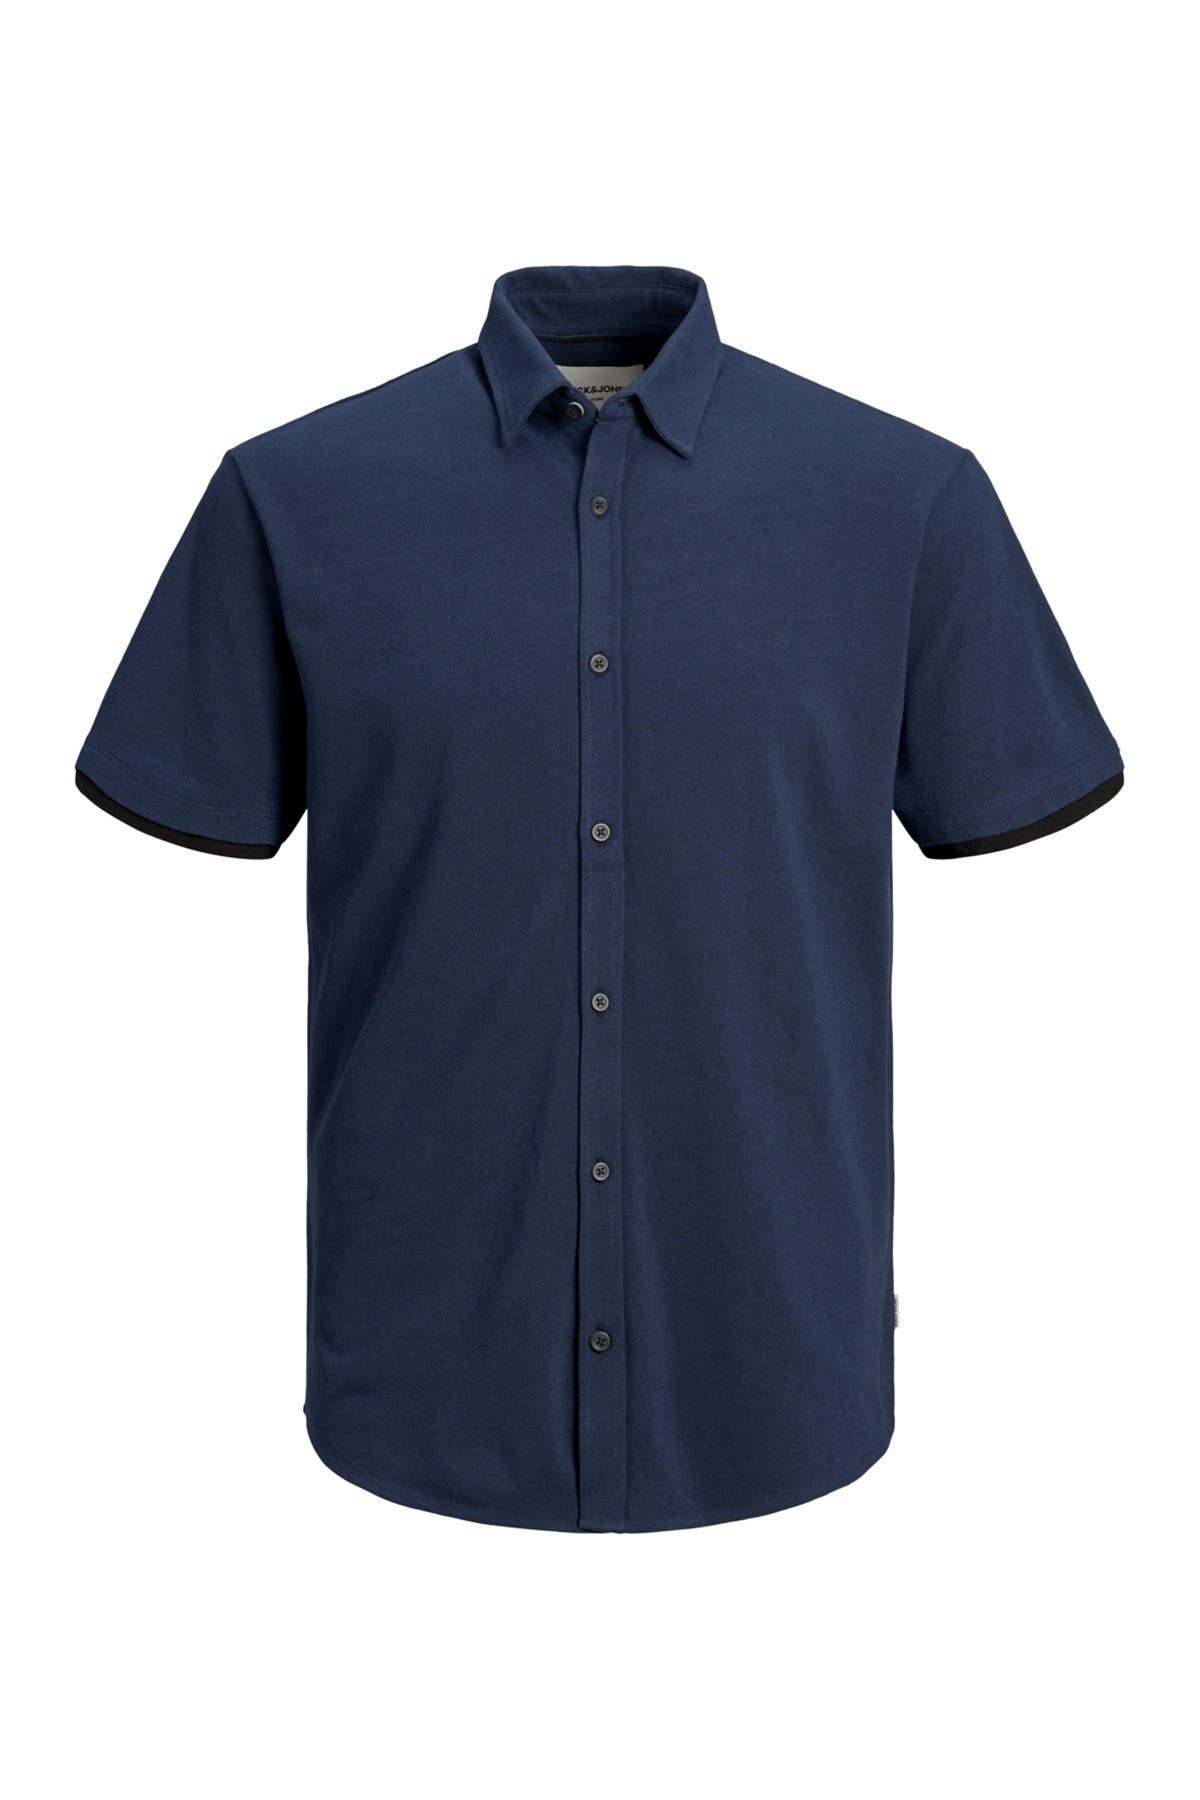 Jack Jones Mercury Short Sleeve Pique Knit Shirt Nordstrom Rack